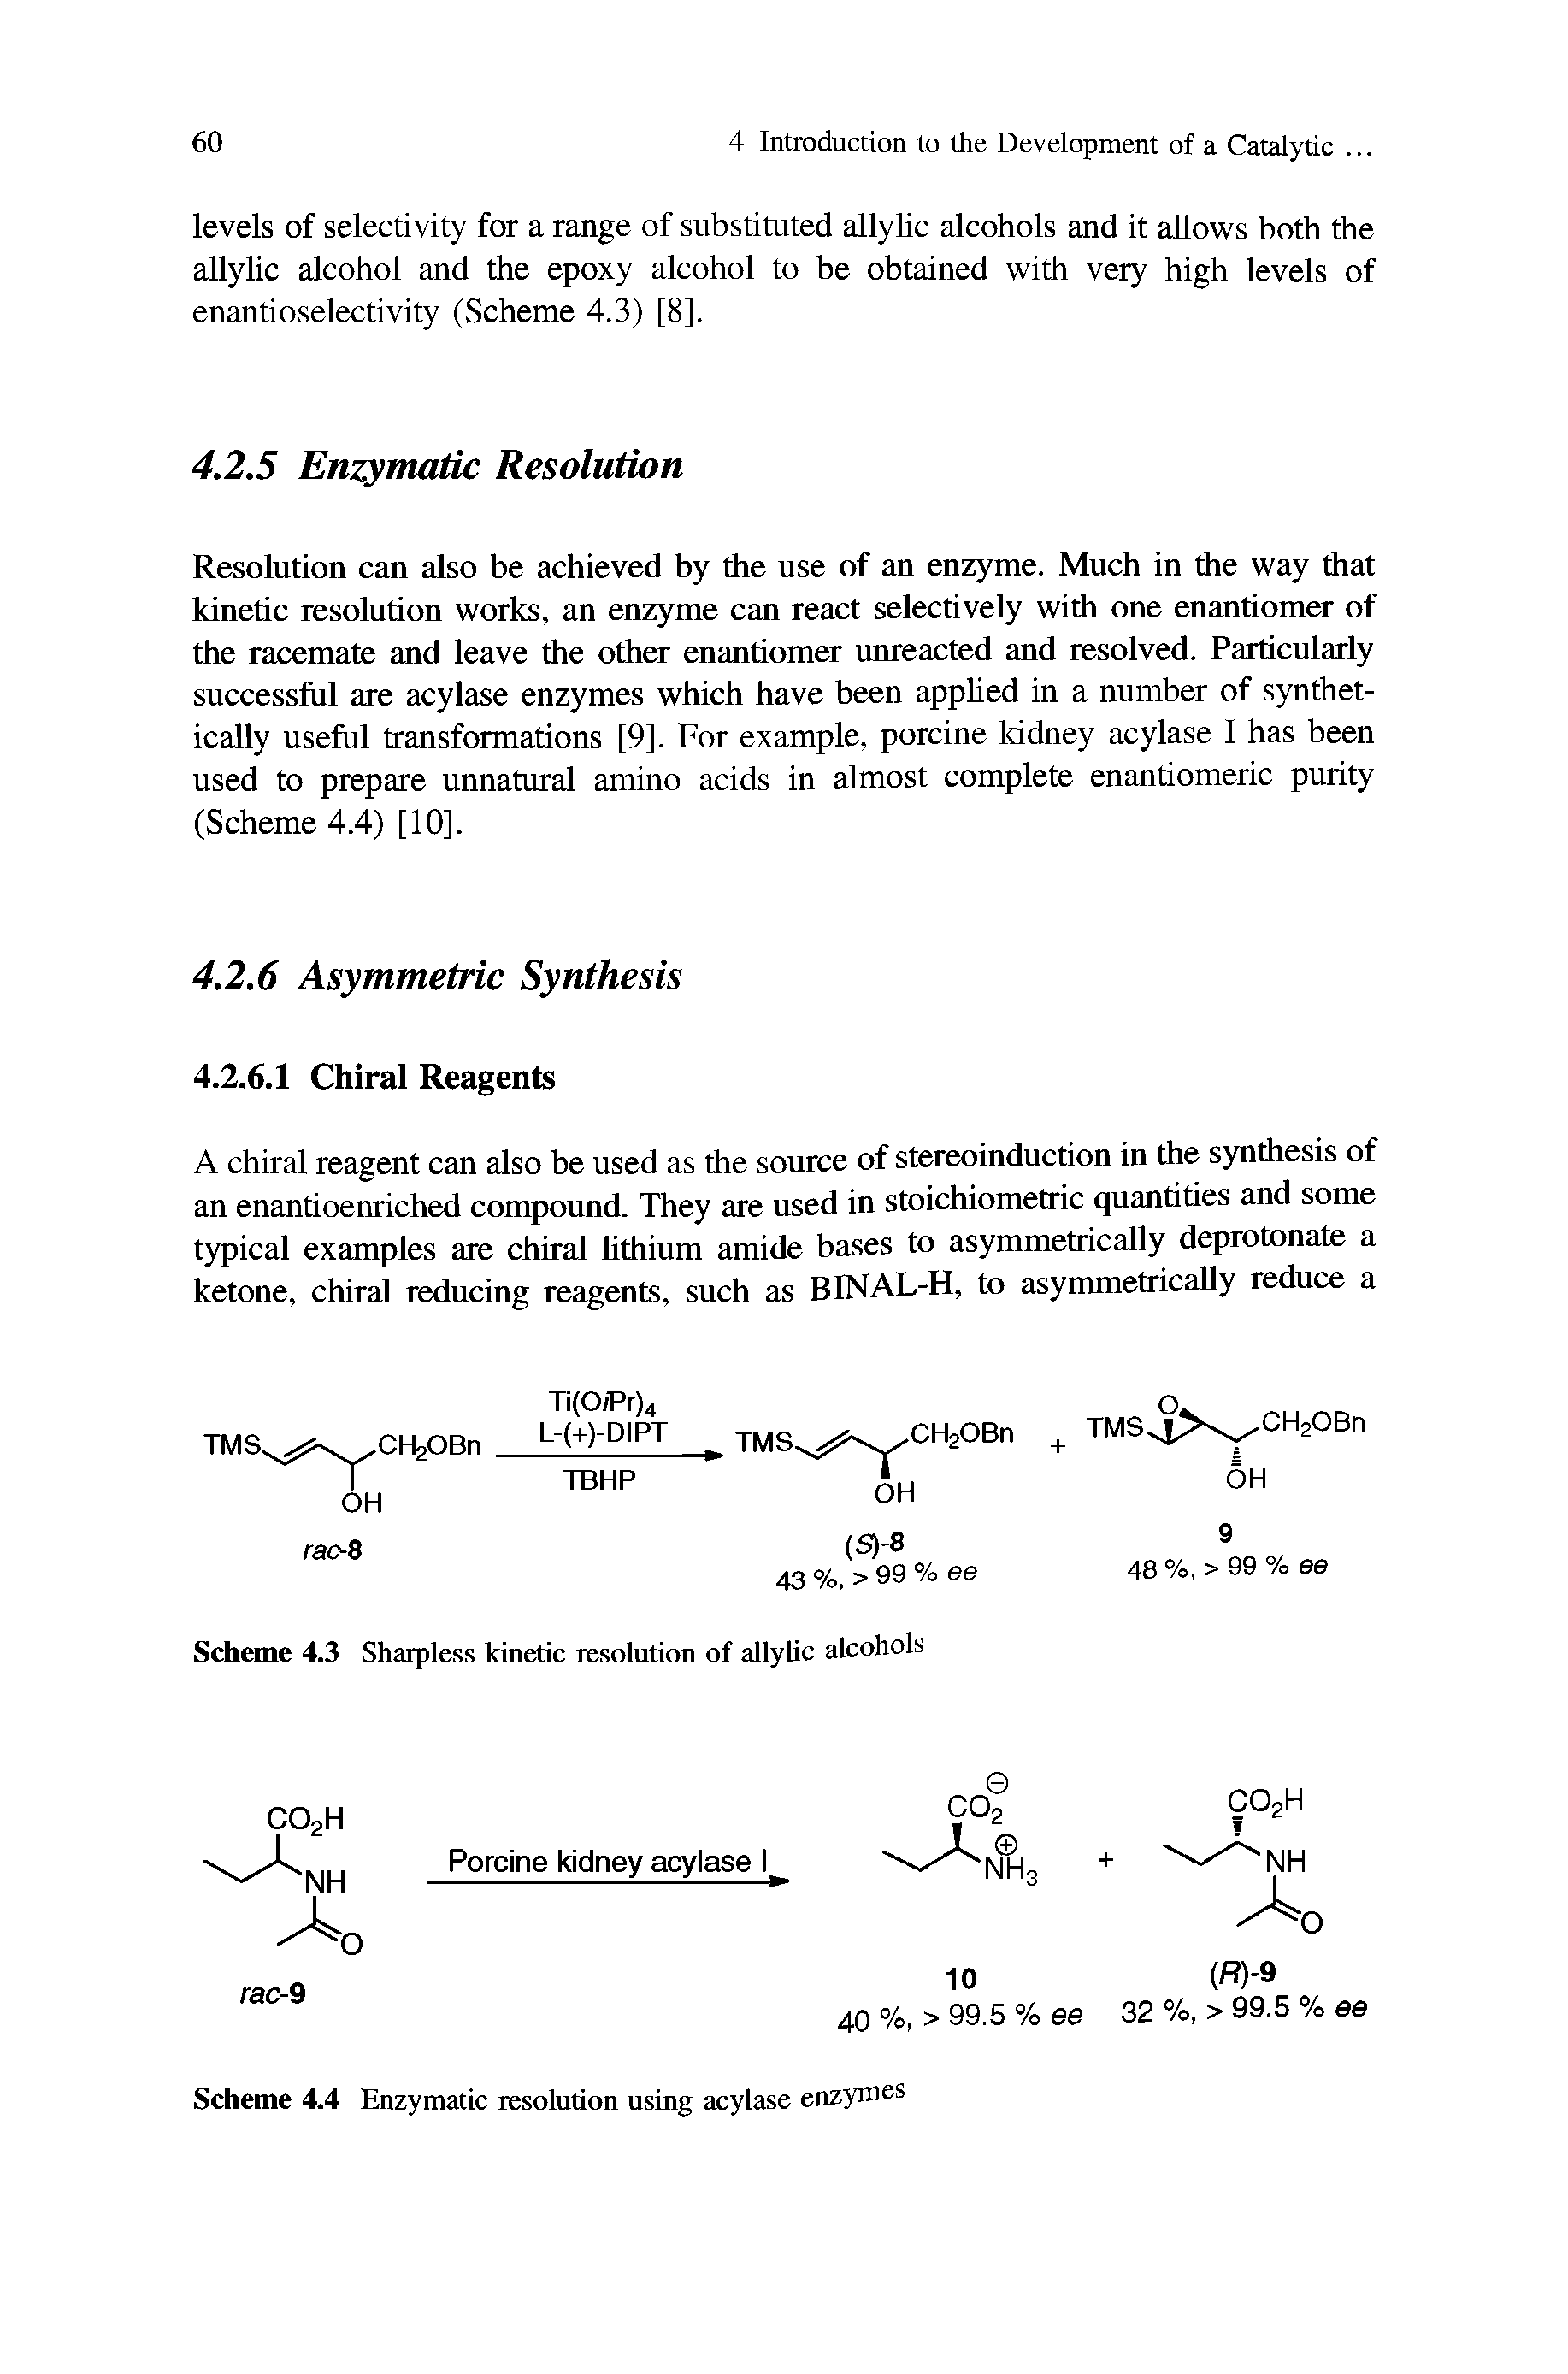 Scheme 4.3 Sharpless kinetic resolution of allylic alcohols...